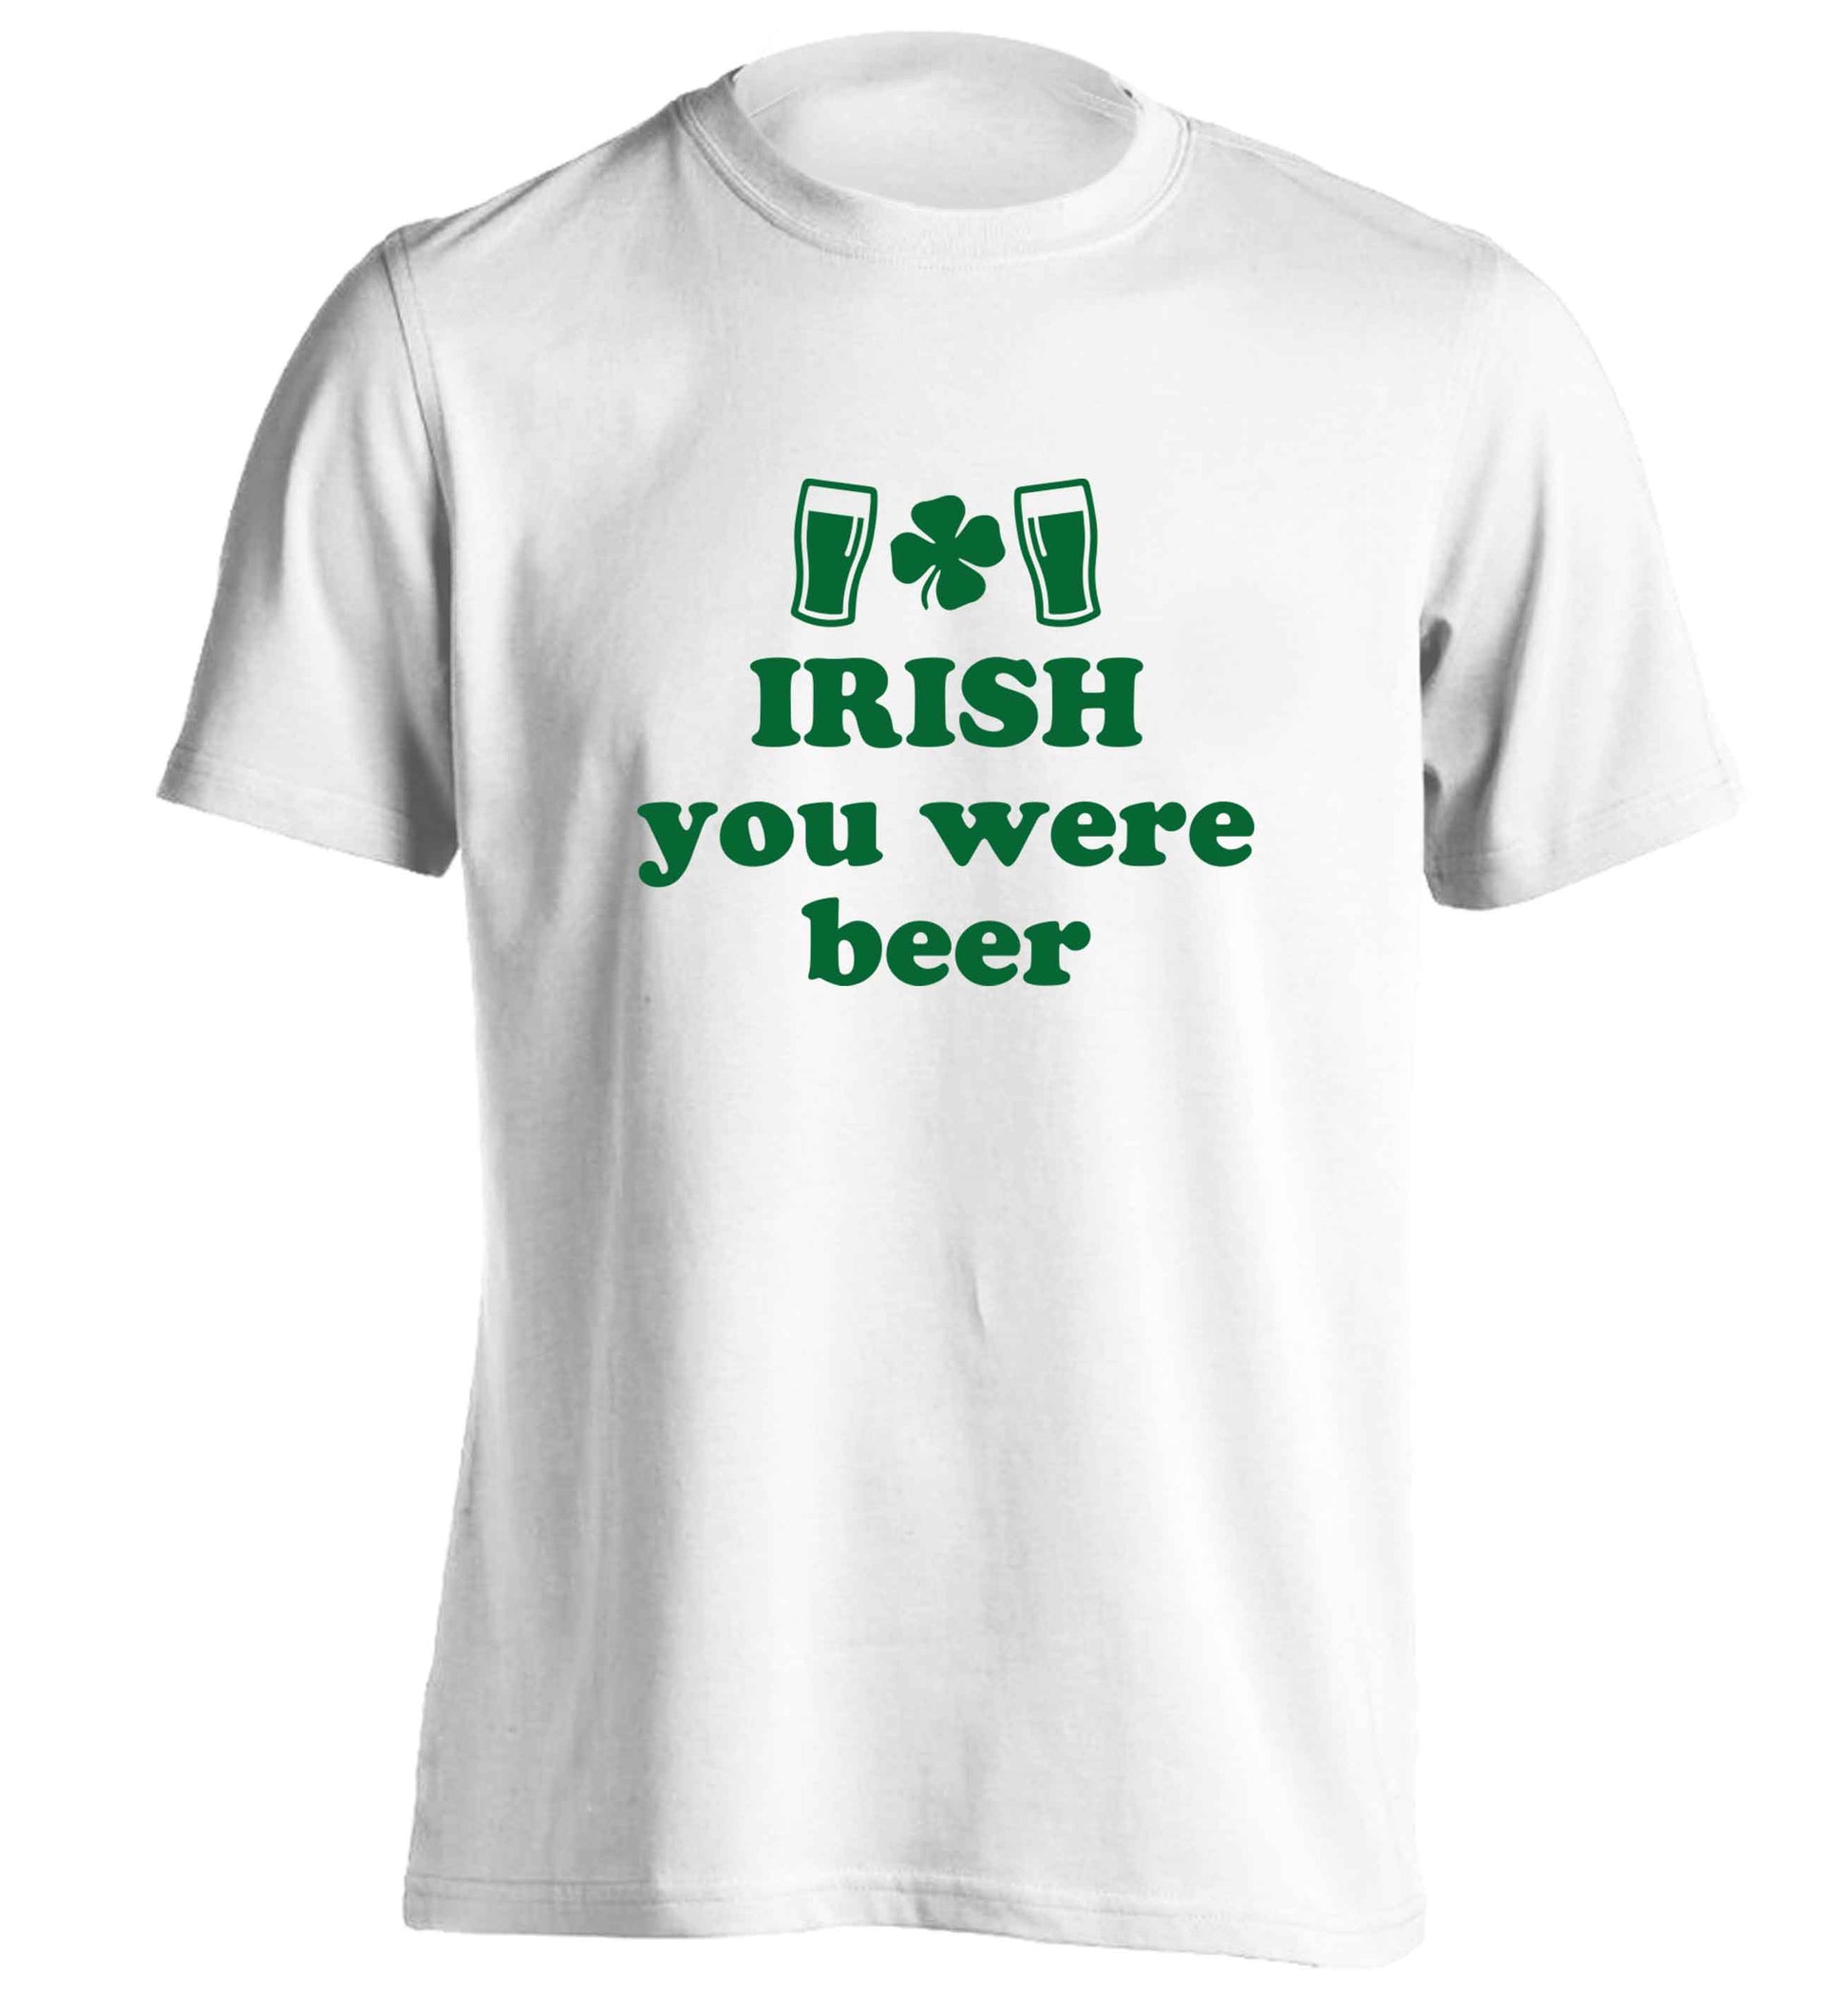 Irish you were beer adults unisex white Tshirt 2XL